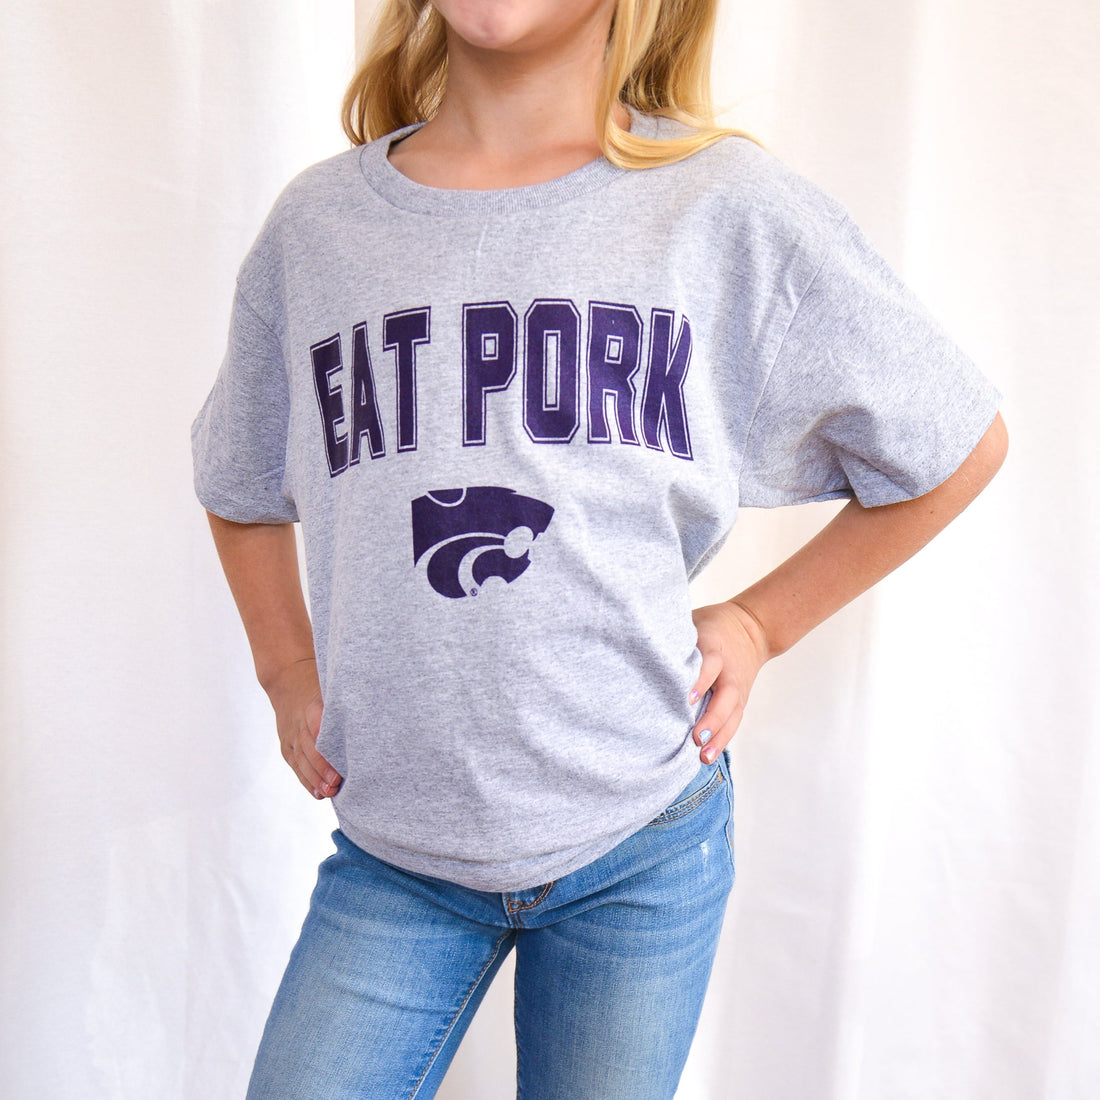 Eat Pork T-Shirt - YOUTH UNISEX - Grey